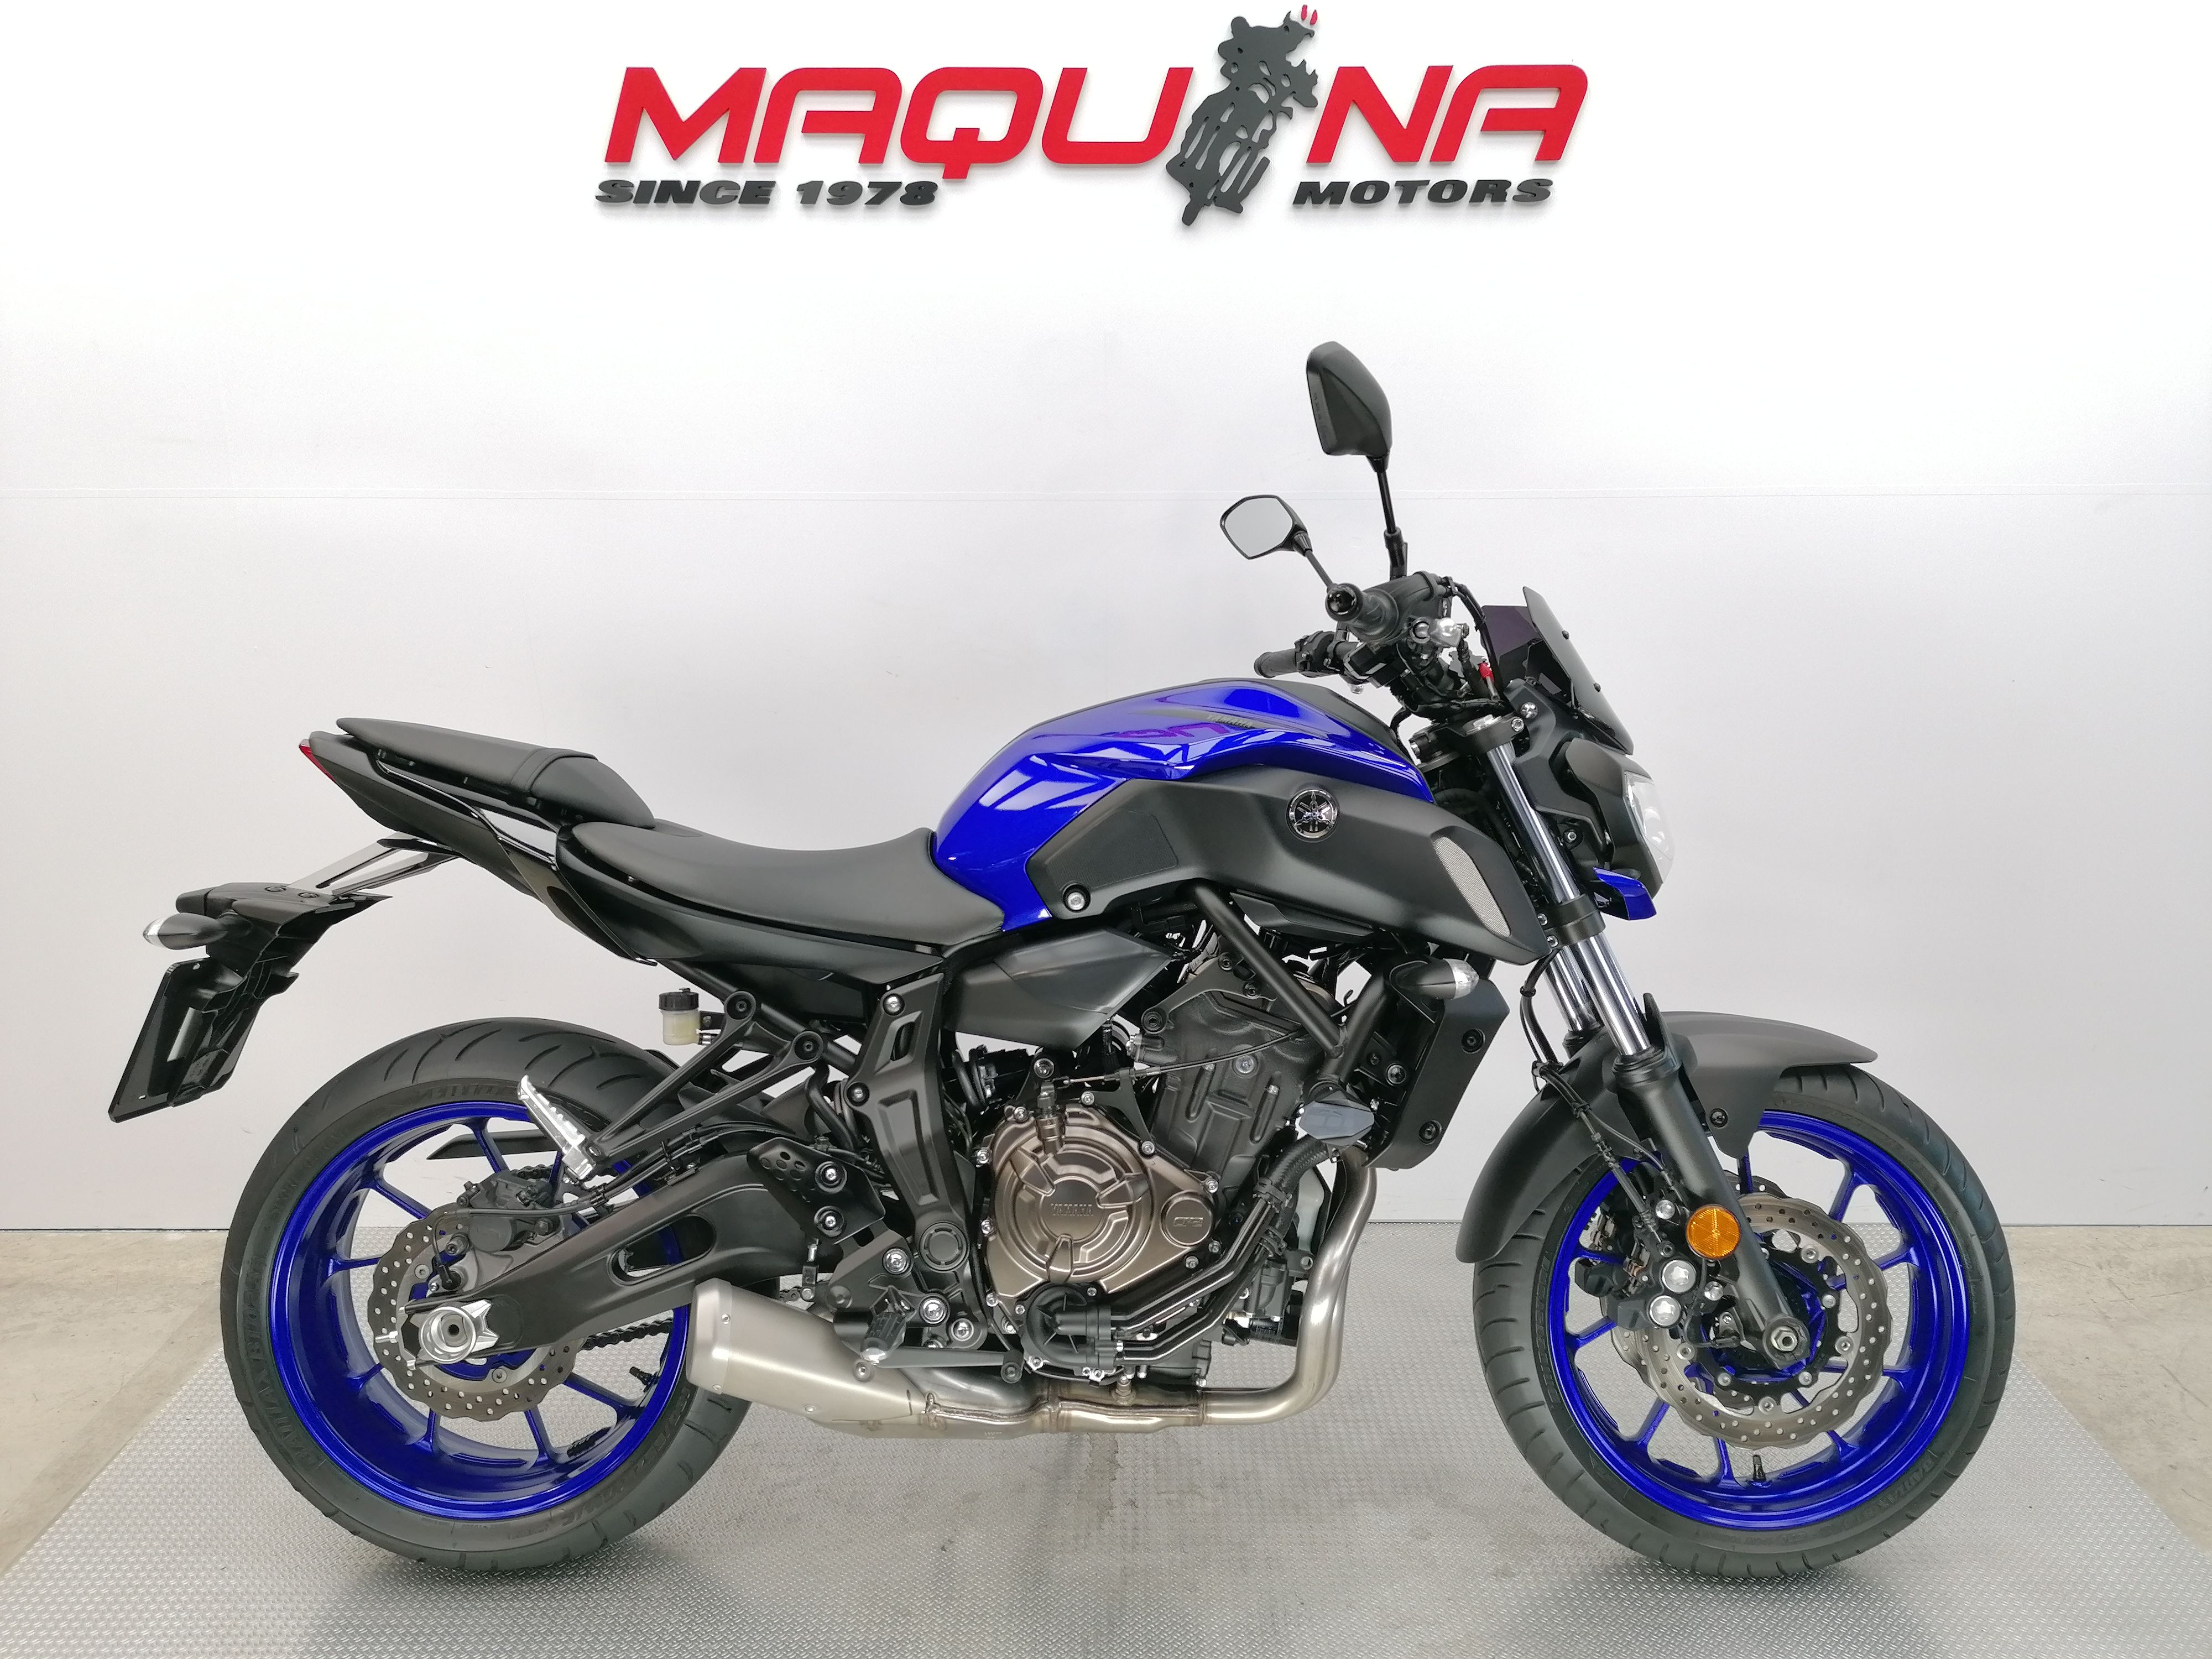 Majestuoso Órgano digestivo Inminente YAMAHA MT 07 – Maquina Motors motos ocasión